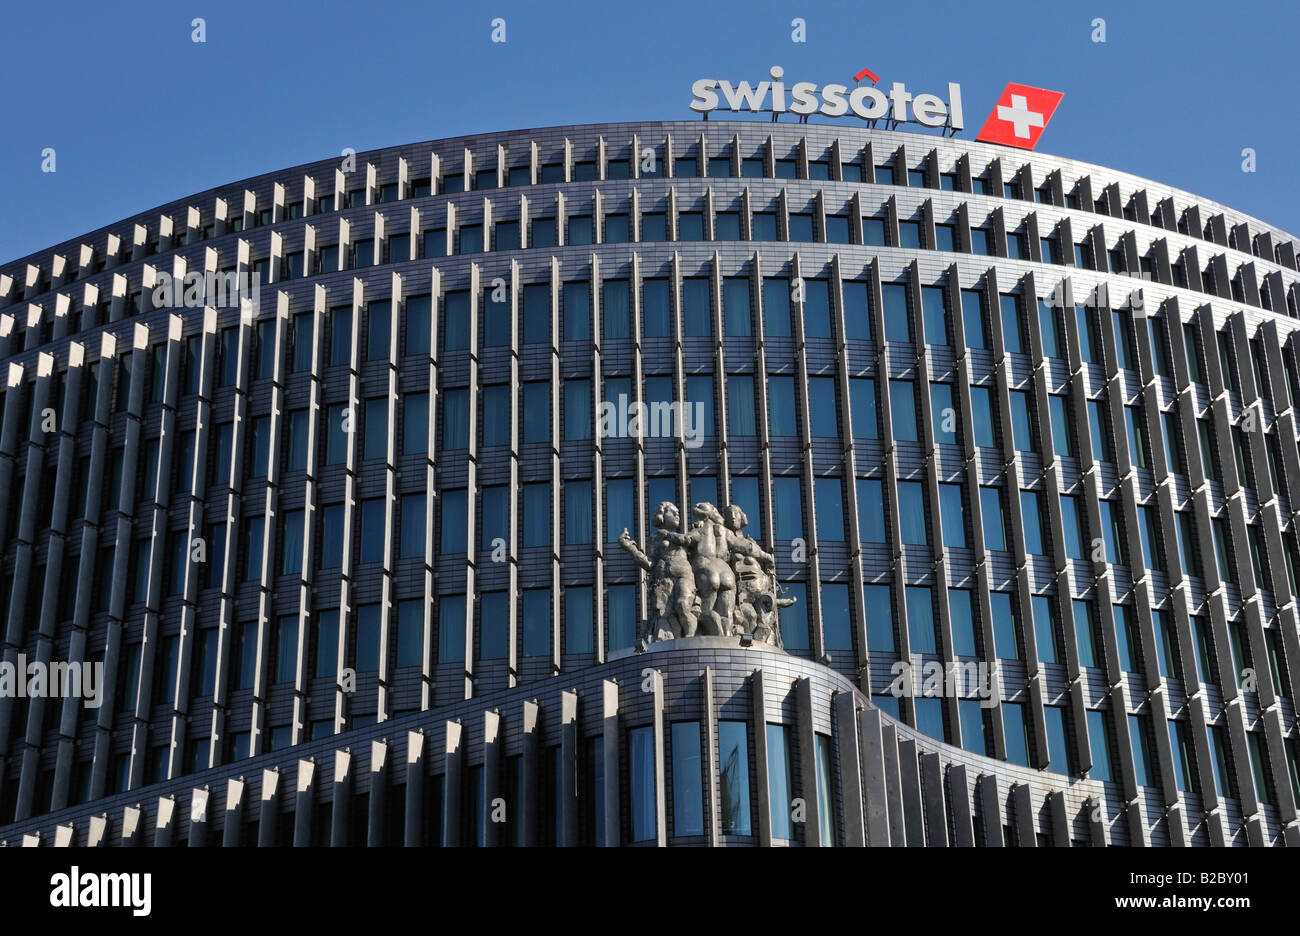 Facade of the Swissôtel Hotel, Kurfuerstendamm, Berlin, Germany, Europe Stock Photo